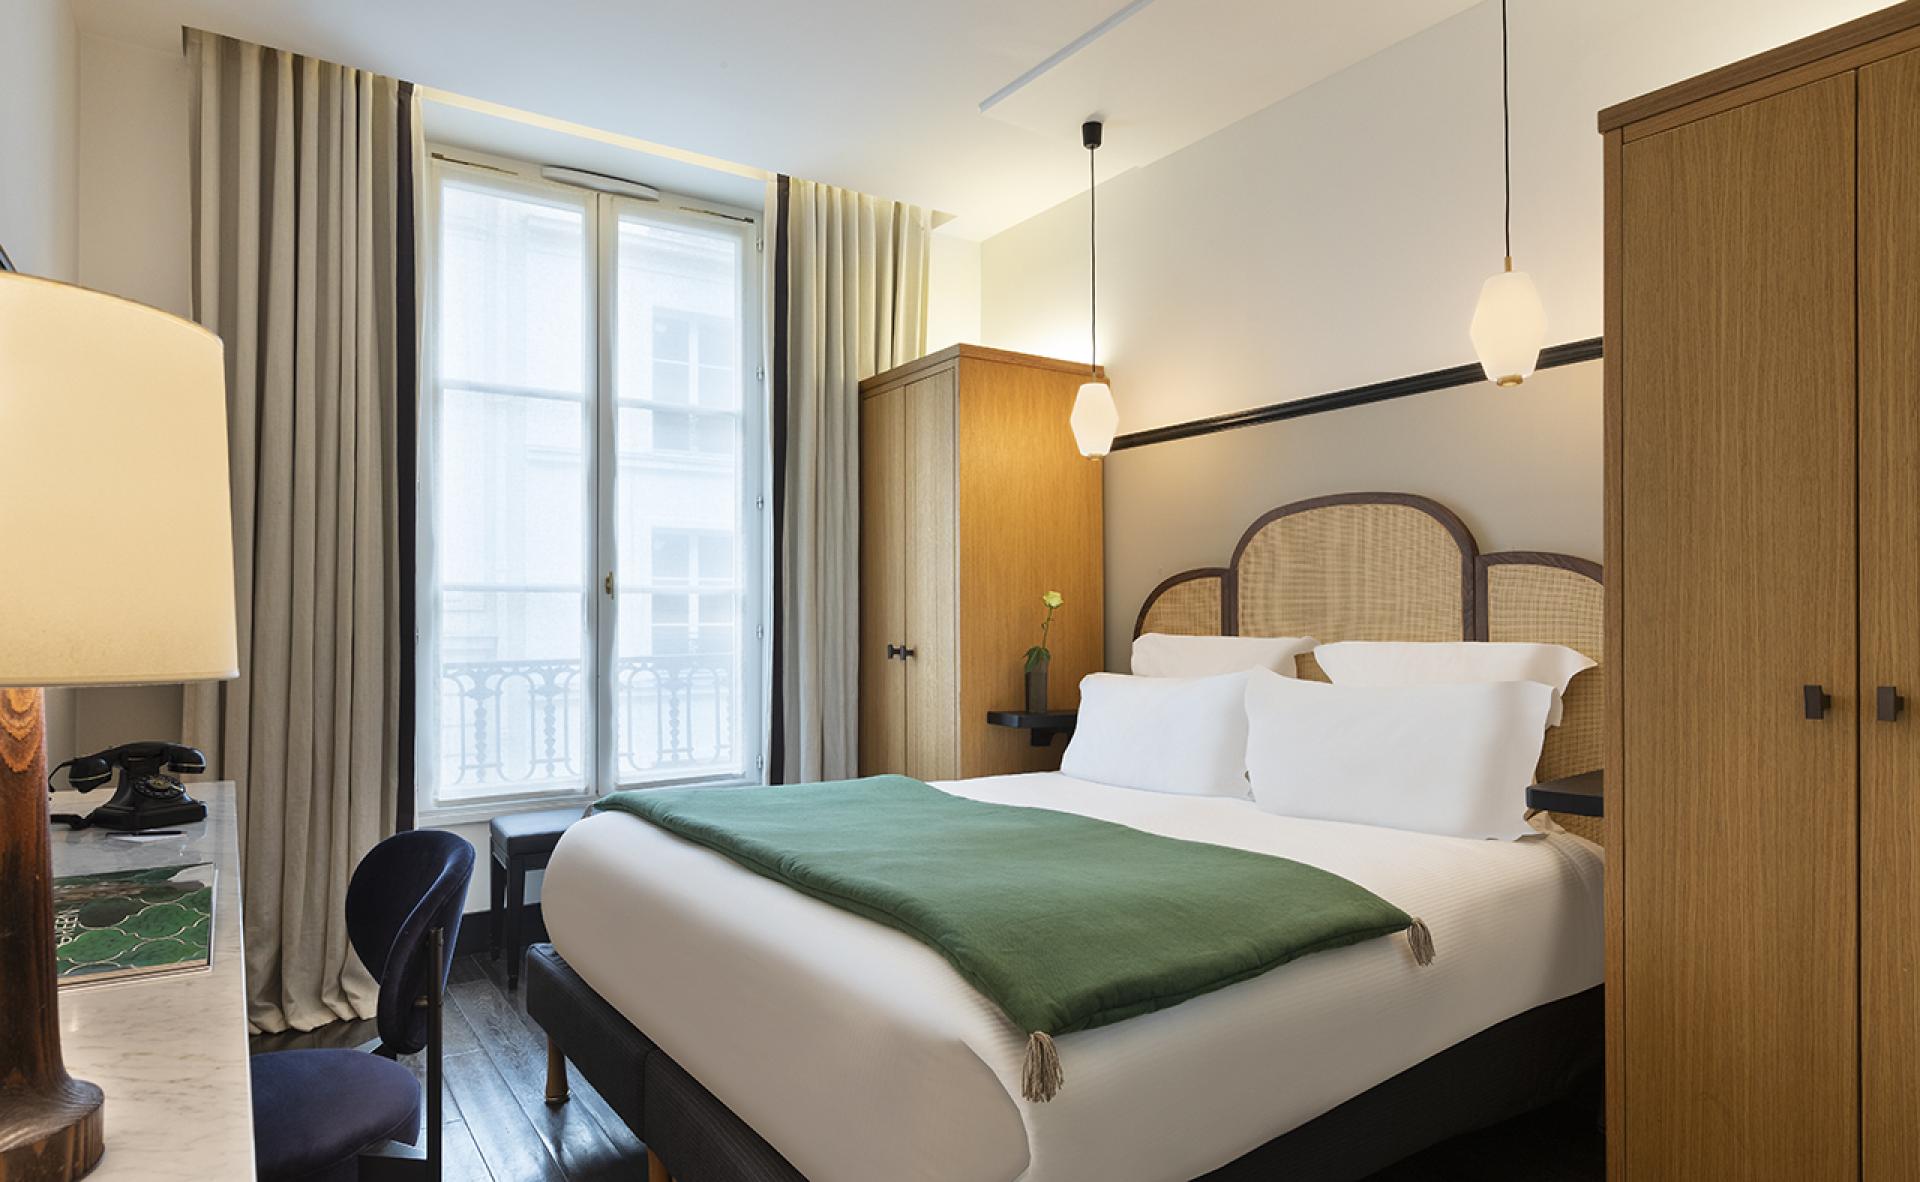 The Chess Hotel  Paris hotels, Hotel inspiration, Hotel interiors